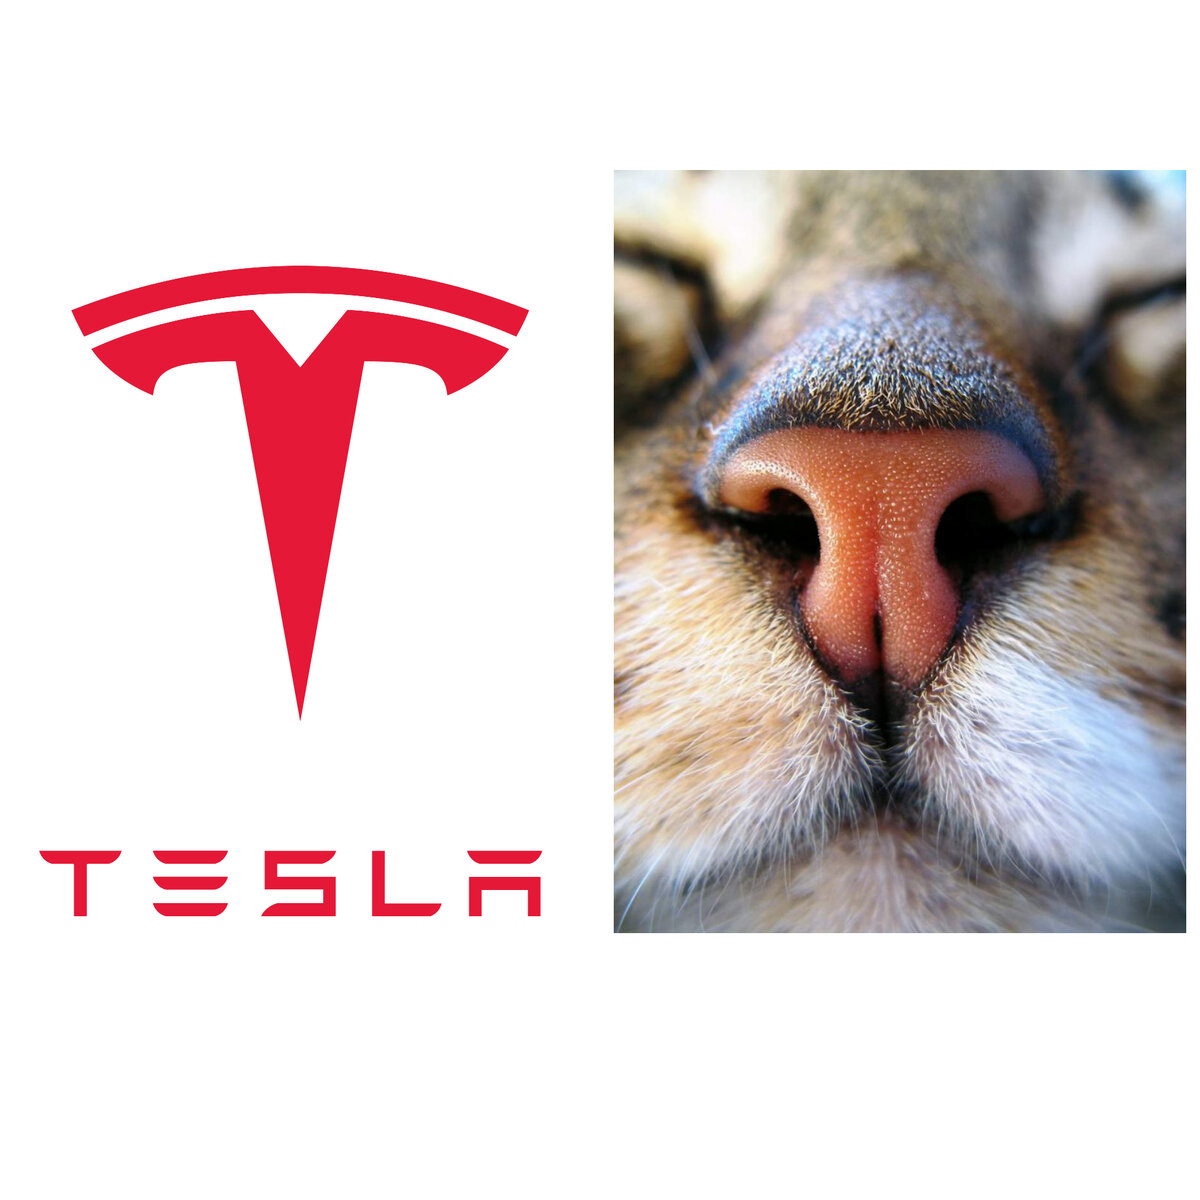     Tesla -              ru  